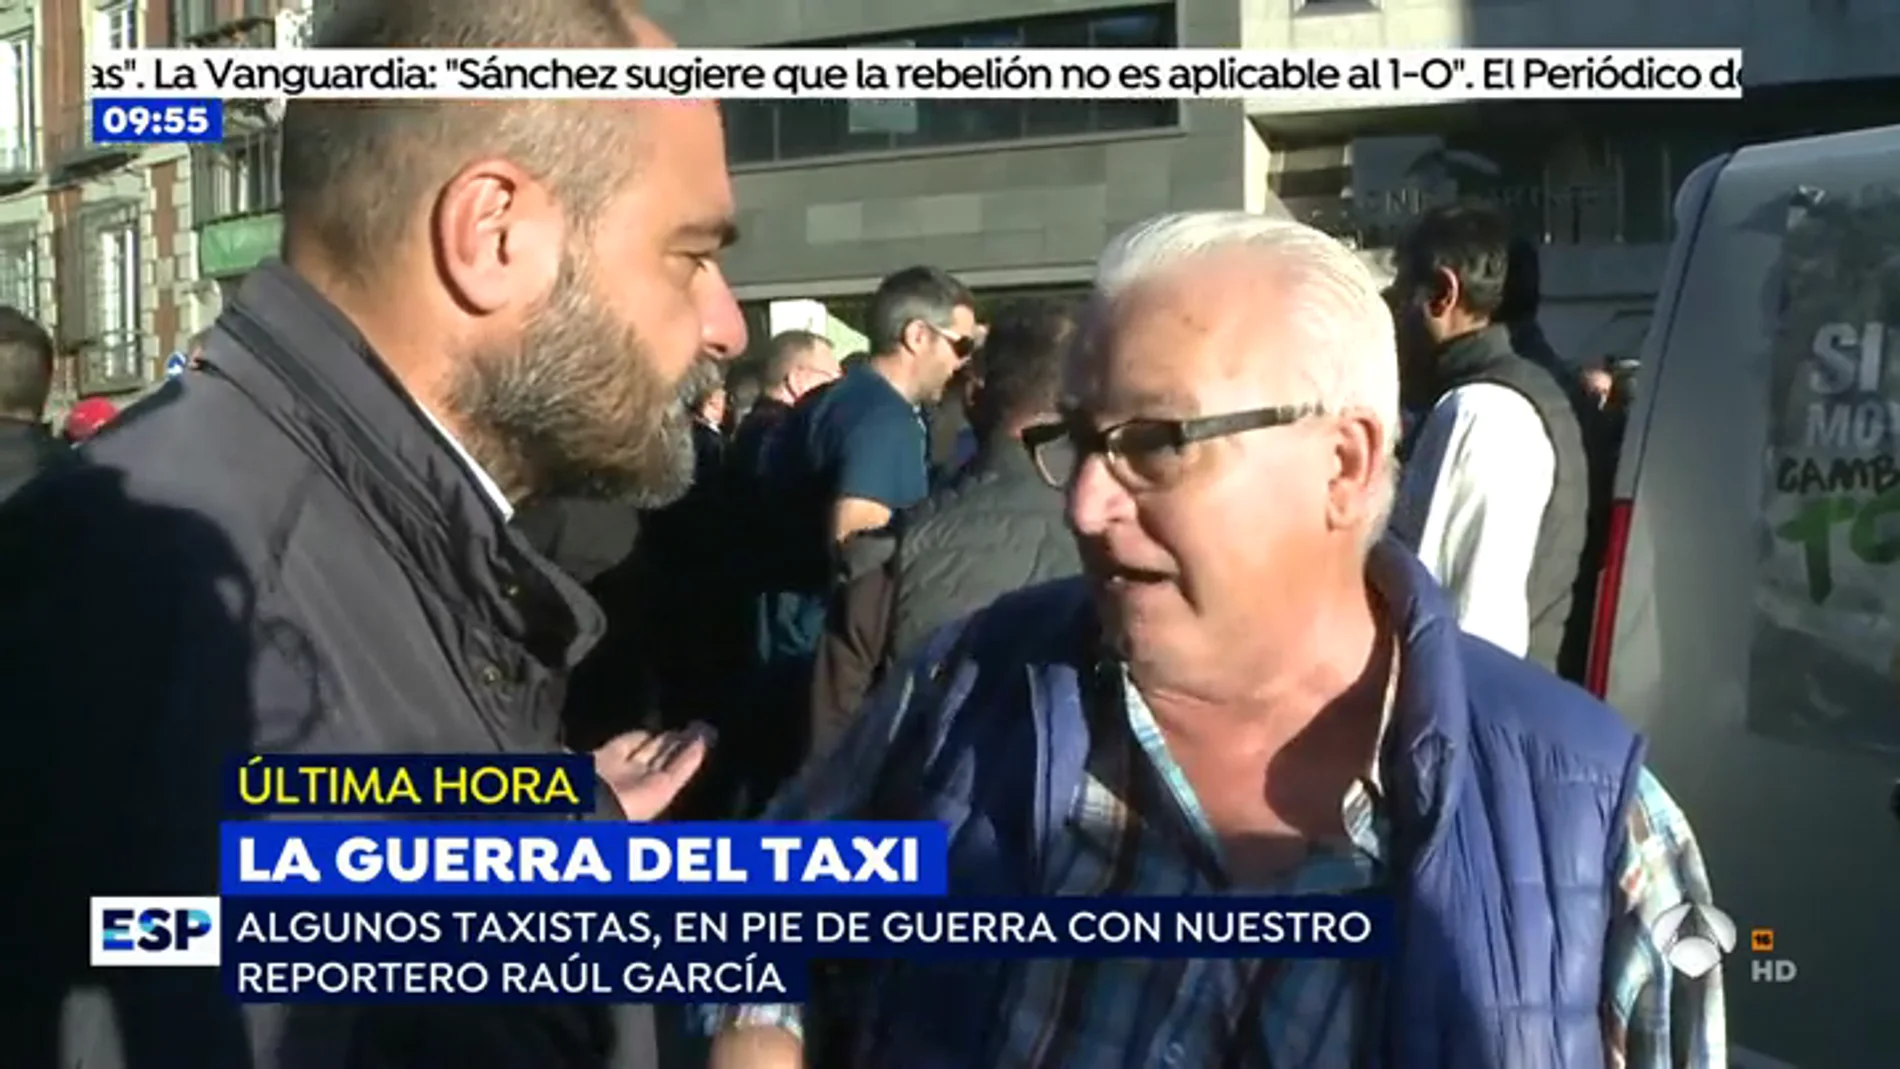 Un grupo de taxistas increpa a un reportero de 'Espejo Público' por emitir un reportaje: "Solo buscáis 'carnaza', lo manipuláis todo"